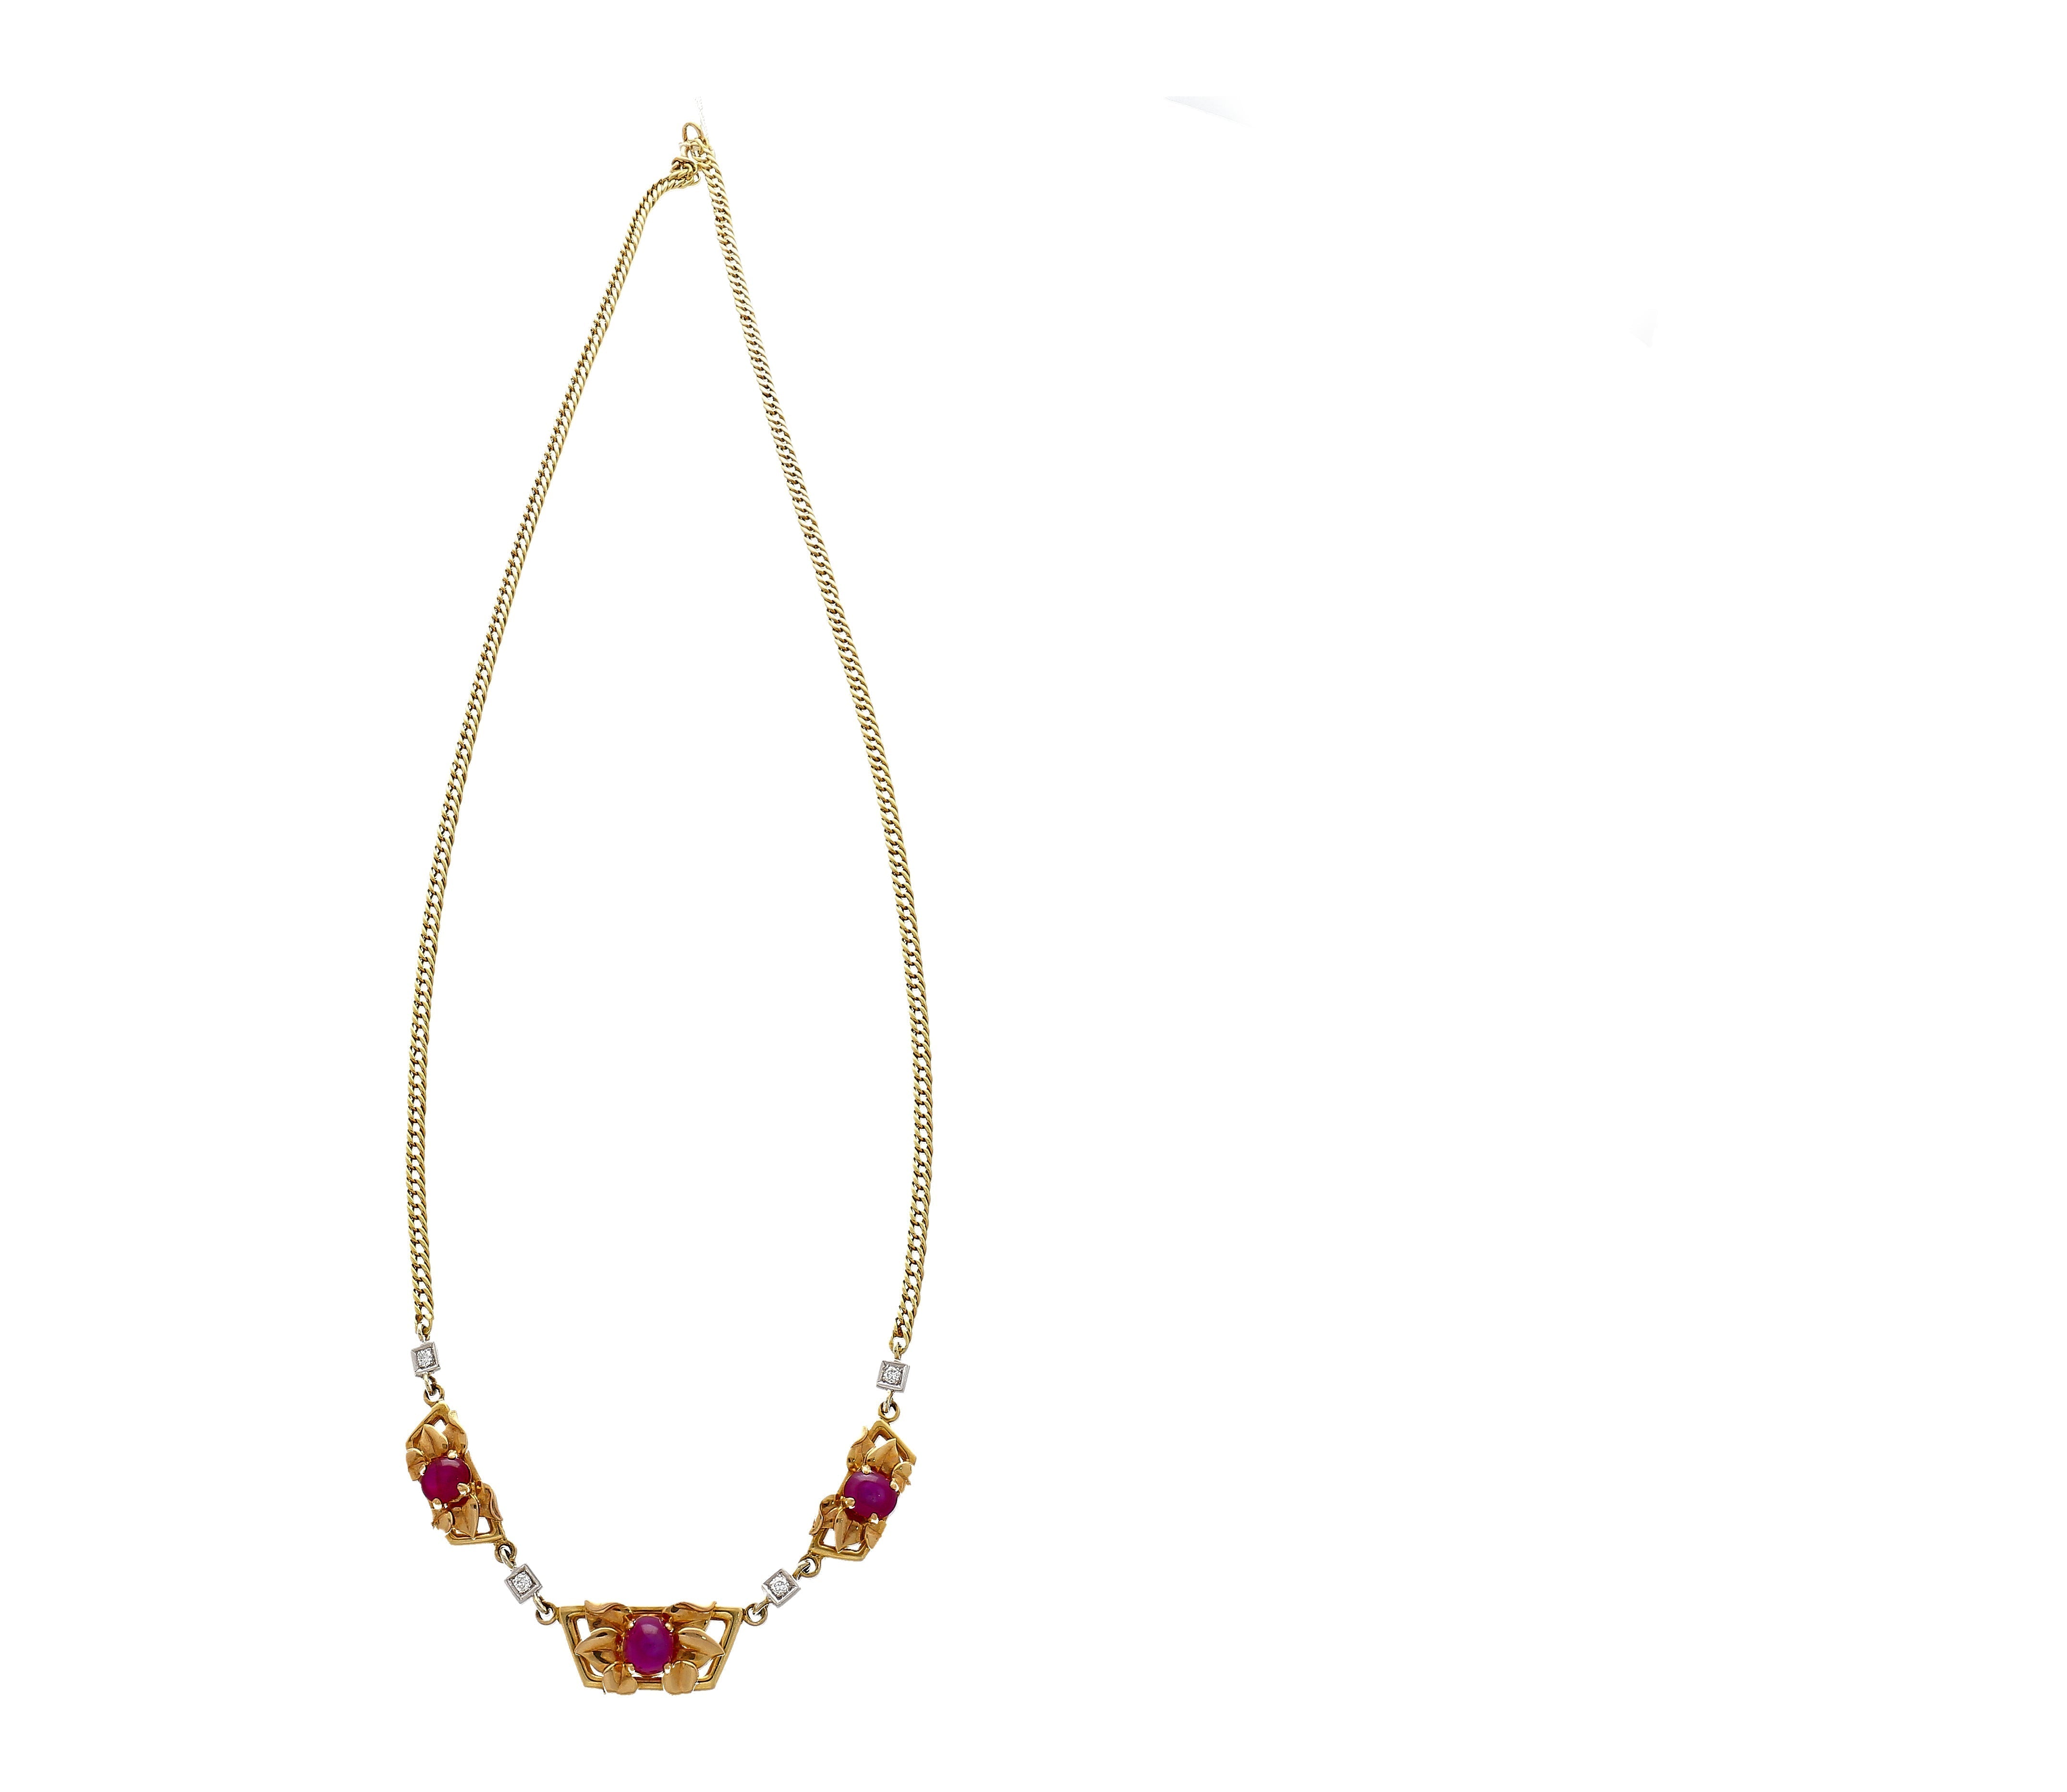 Vintage-Retro-Era-6_22-Carat-Star-Ruby-Diamond-Necklace-with-14K-Gold-Carved-Detailing-Necklace-2.jpg